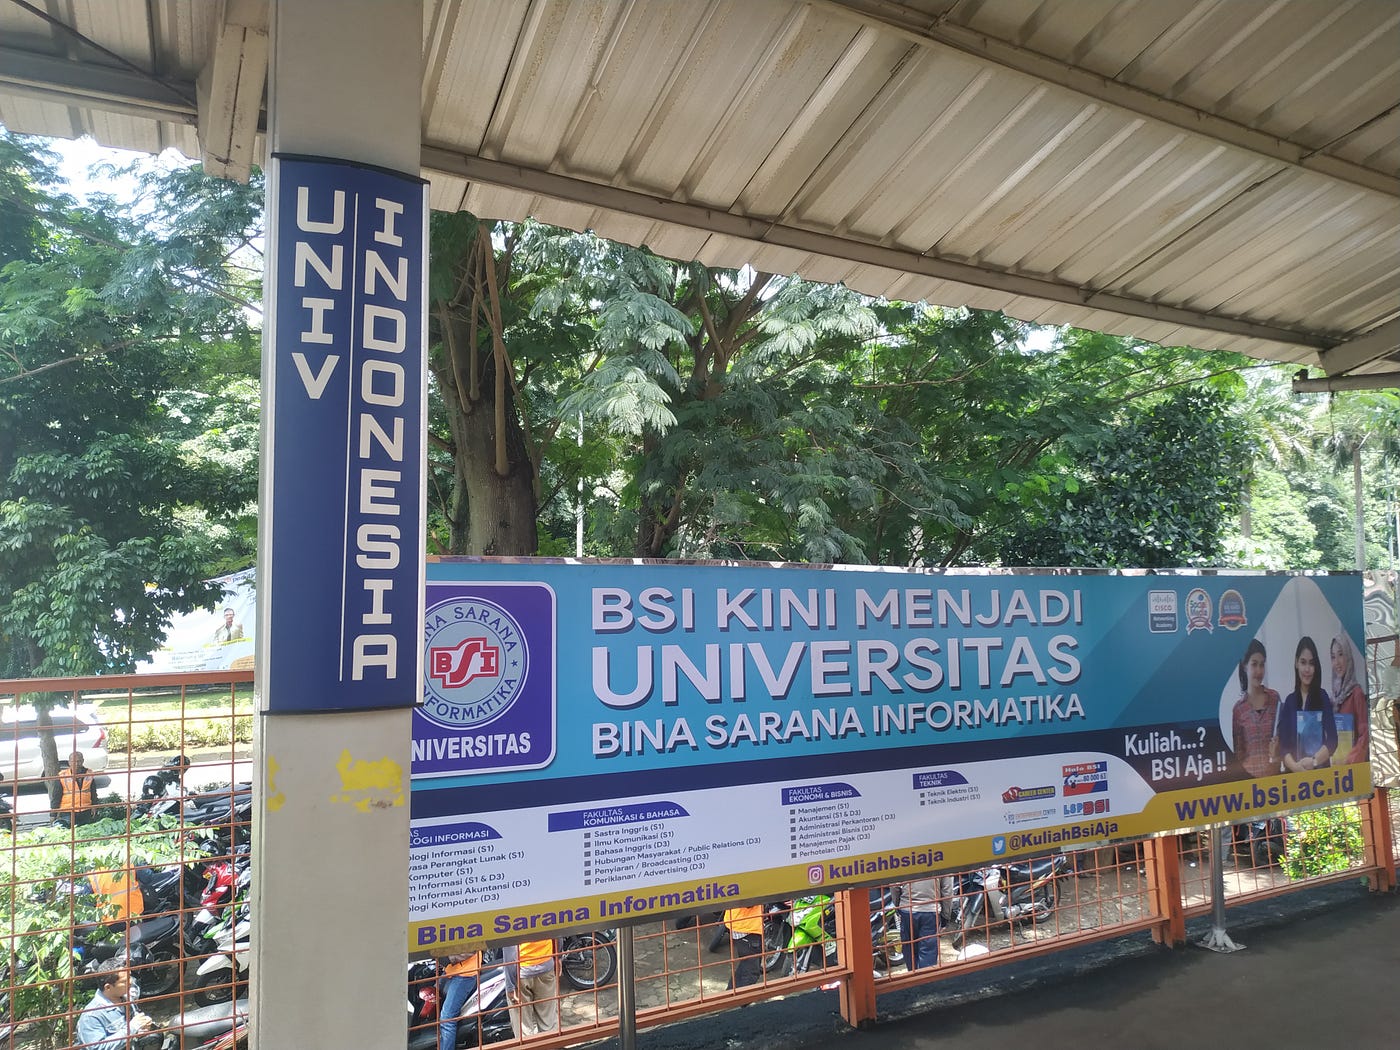 Stasiun universitas indonesia